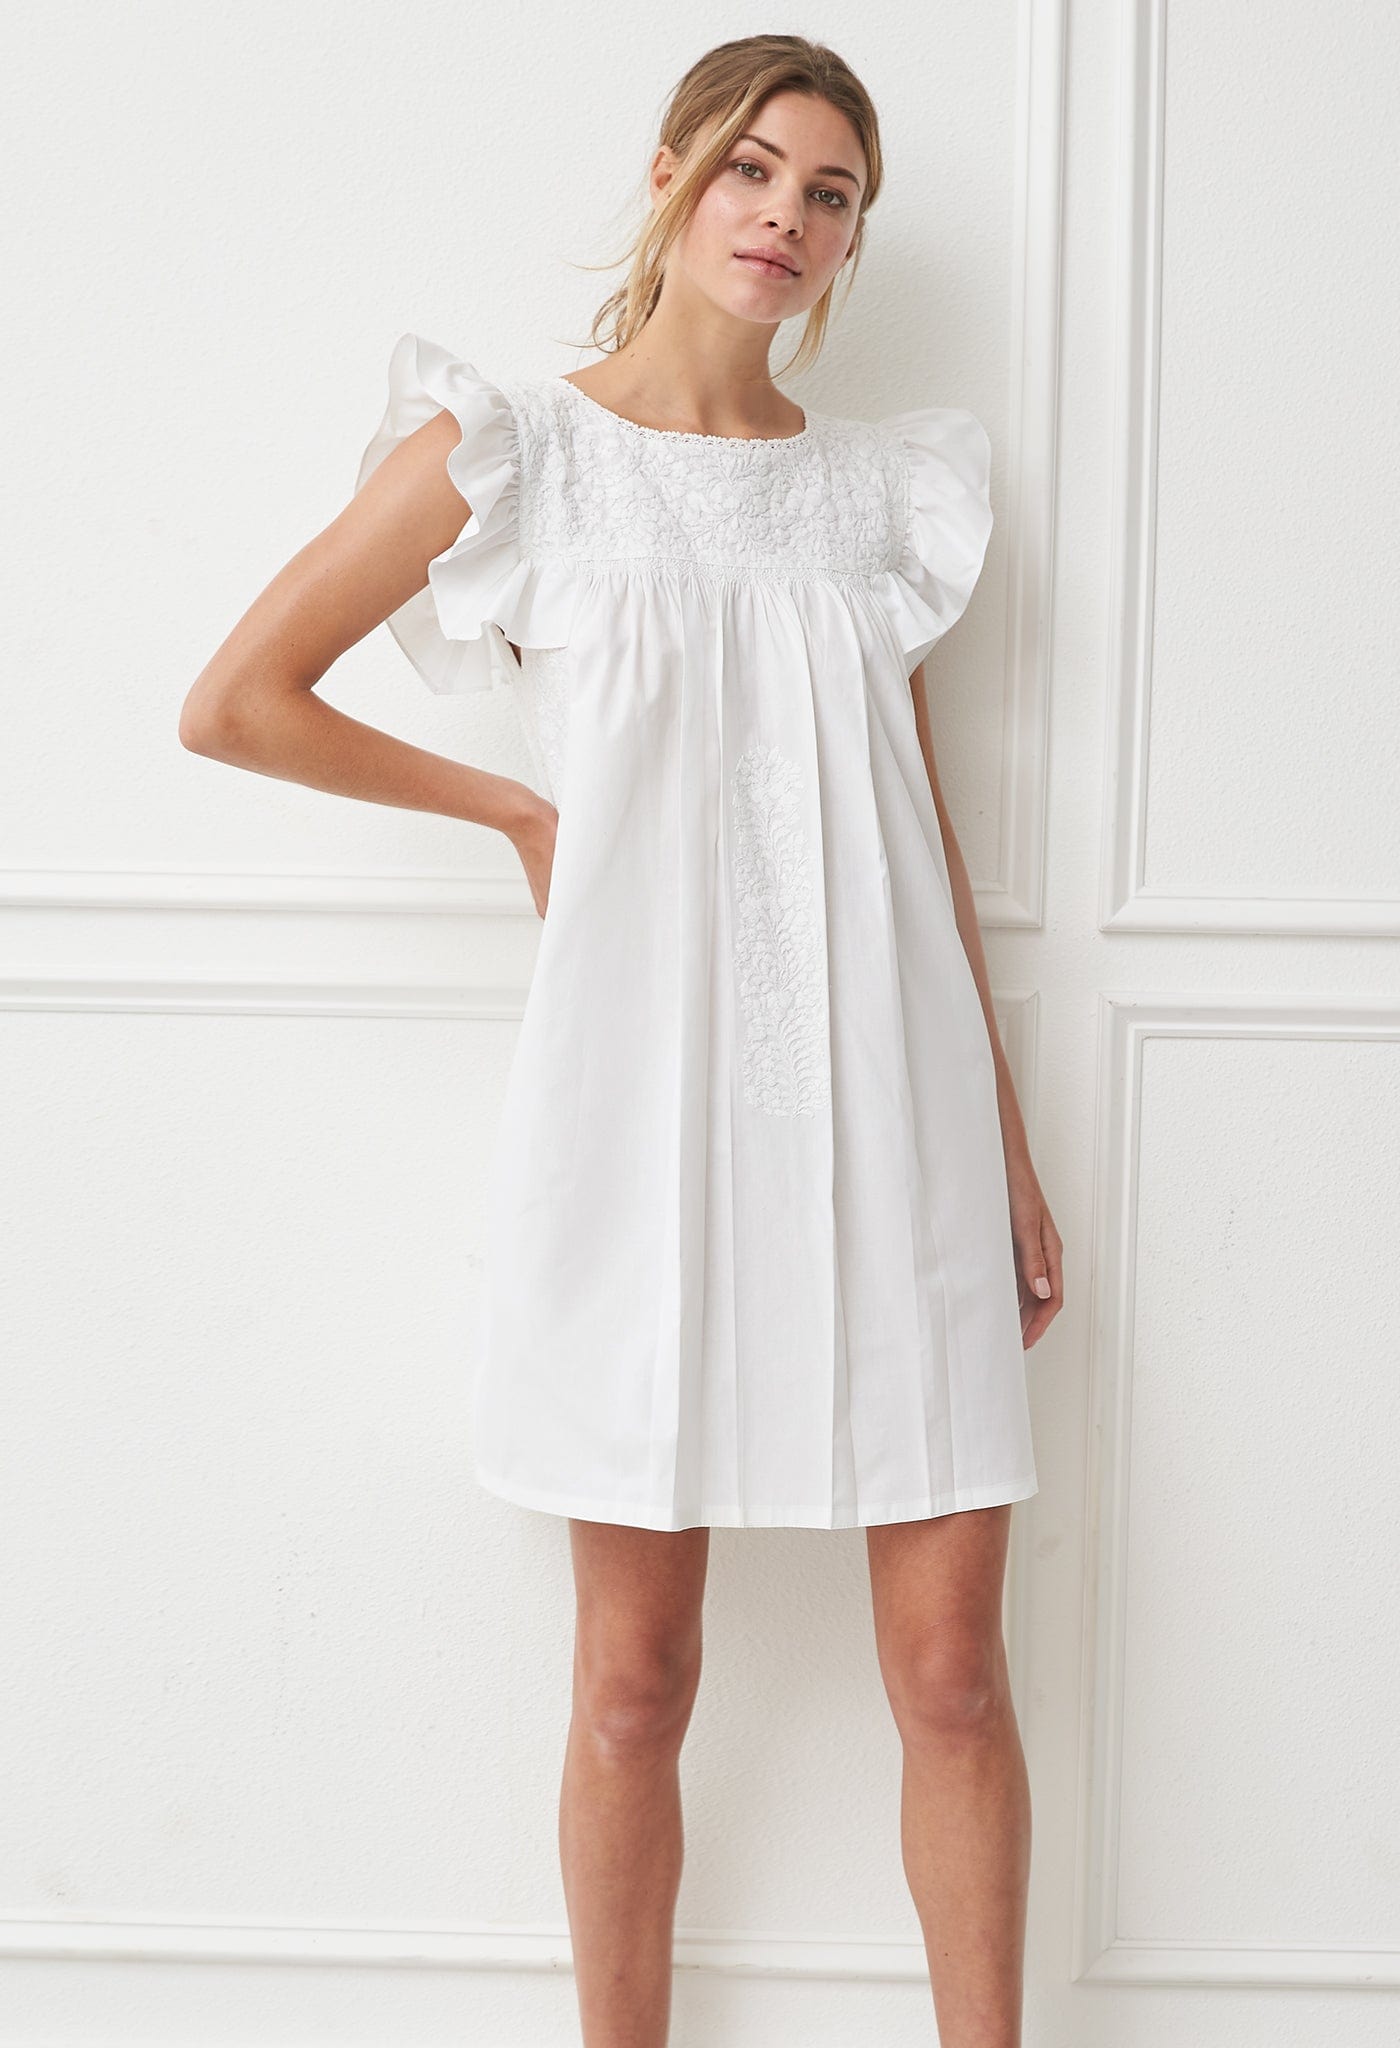 Soledad Short Dress Dress Soledad Blanca Nieve Soledad Blanca Nieve Dress 100% Cotton Hand-Embroidered in White